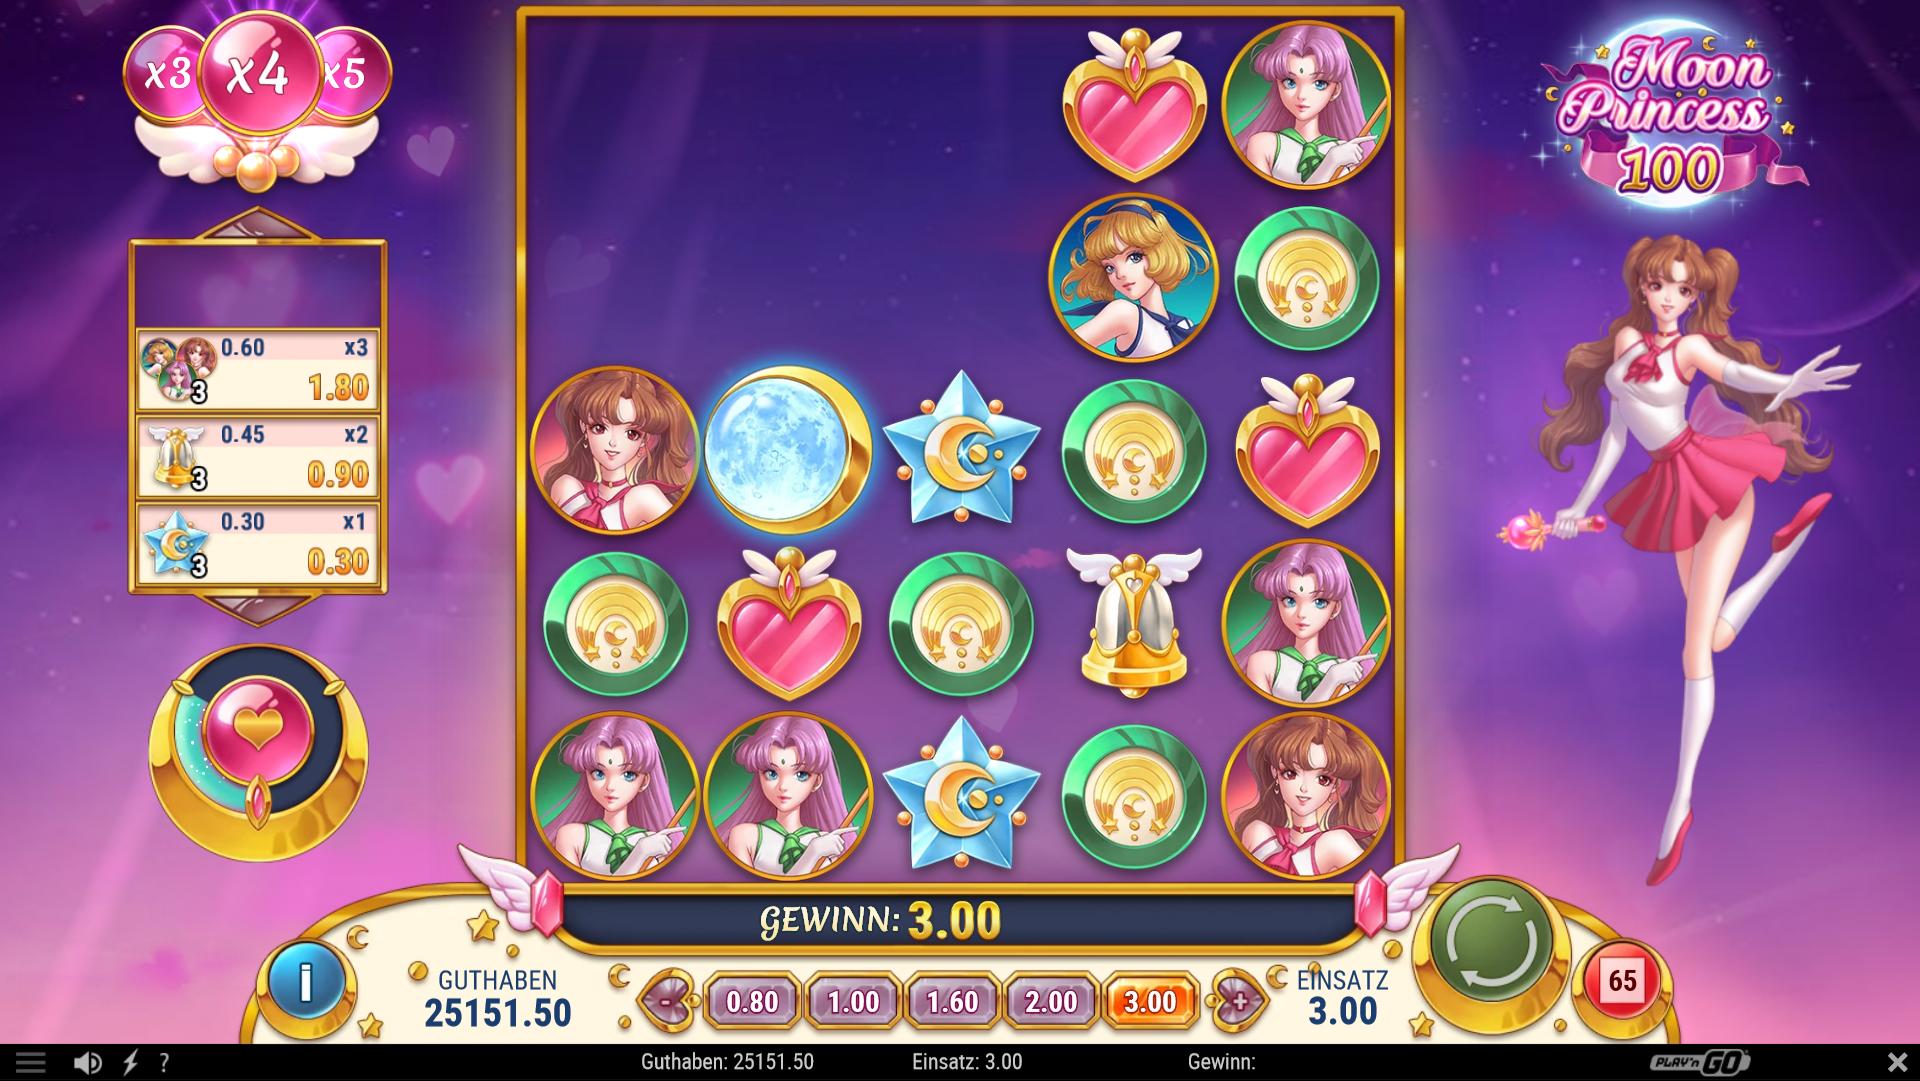 Spiele Moon Princess 100 kostenlos